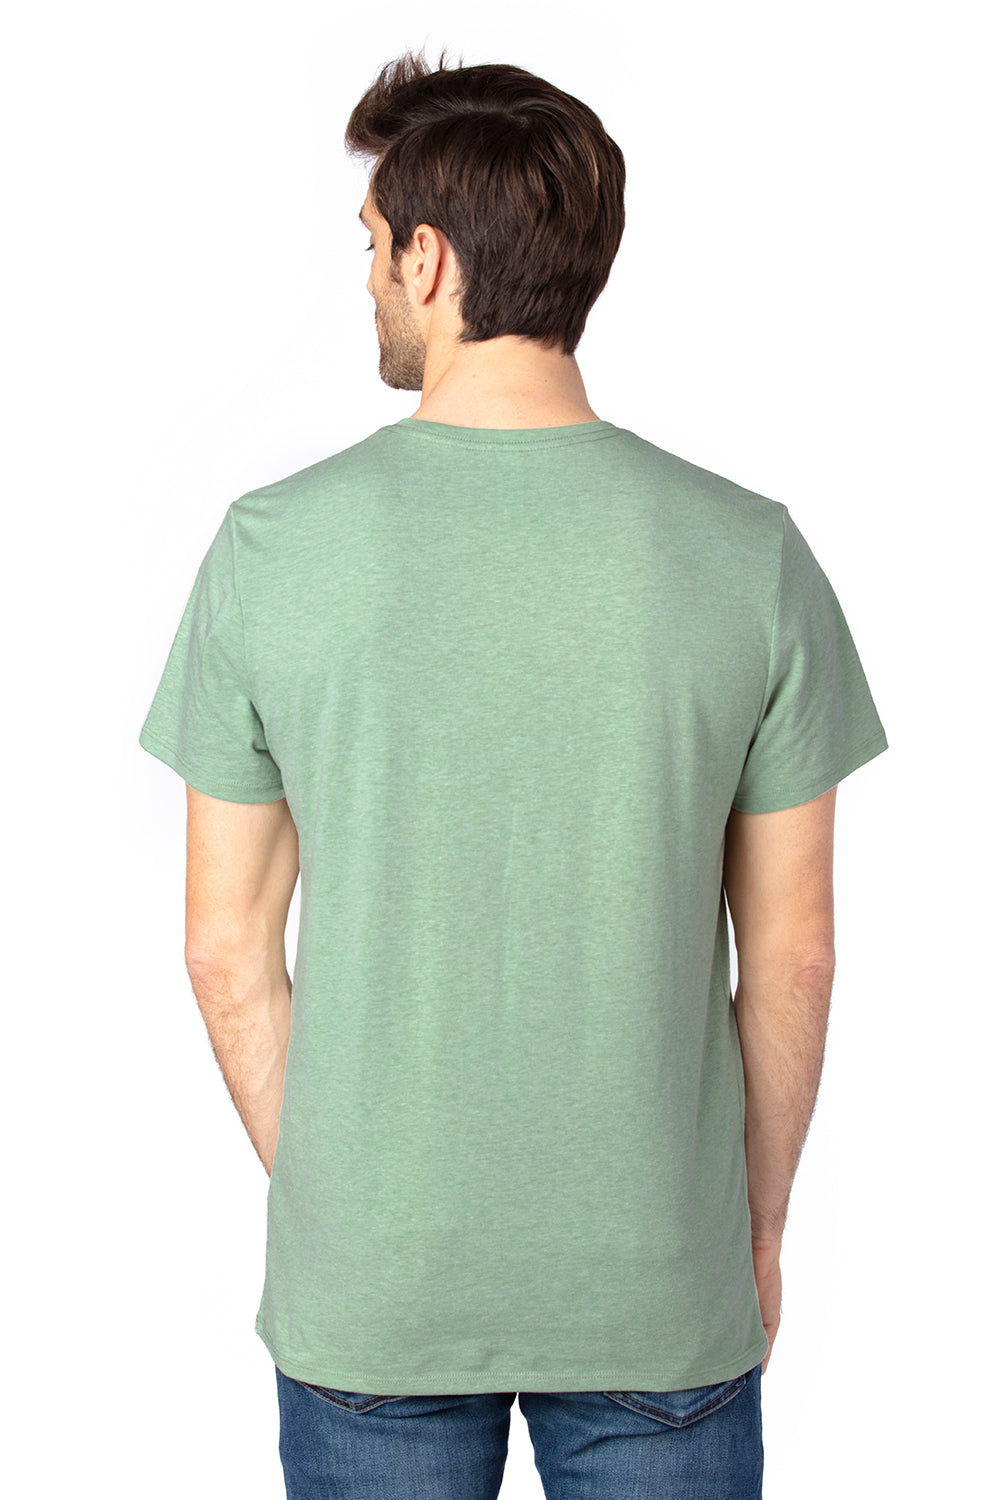 Threadfast Apparel 100A Mens Ultimate Short Sleeve Crewneck T-Shirt Heather Army Green Back